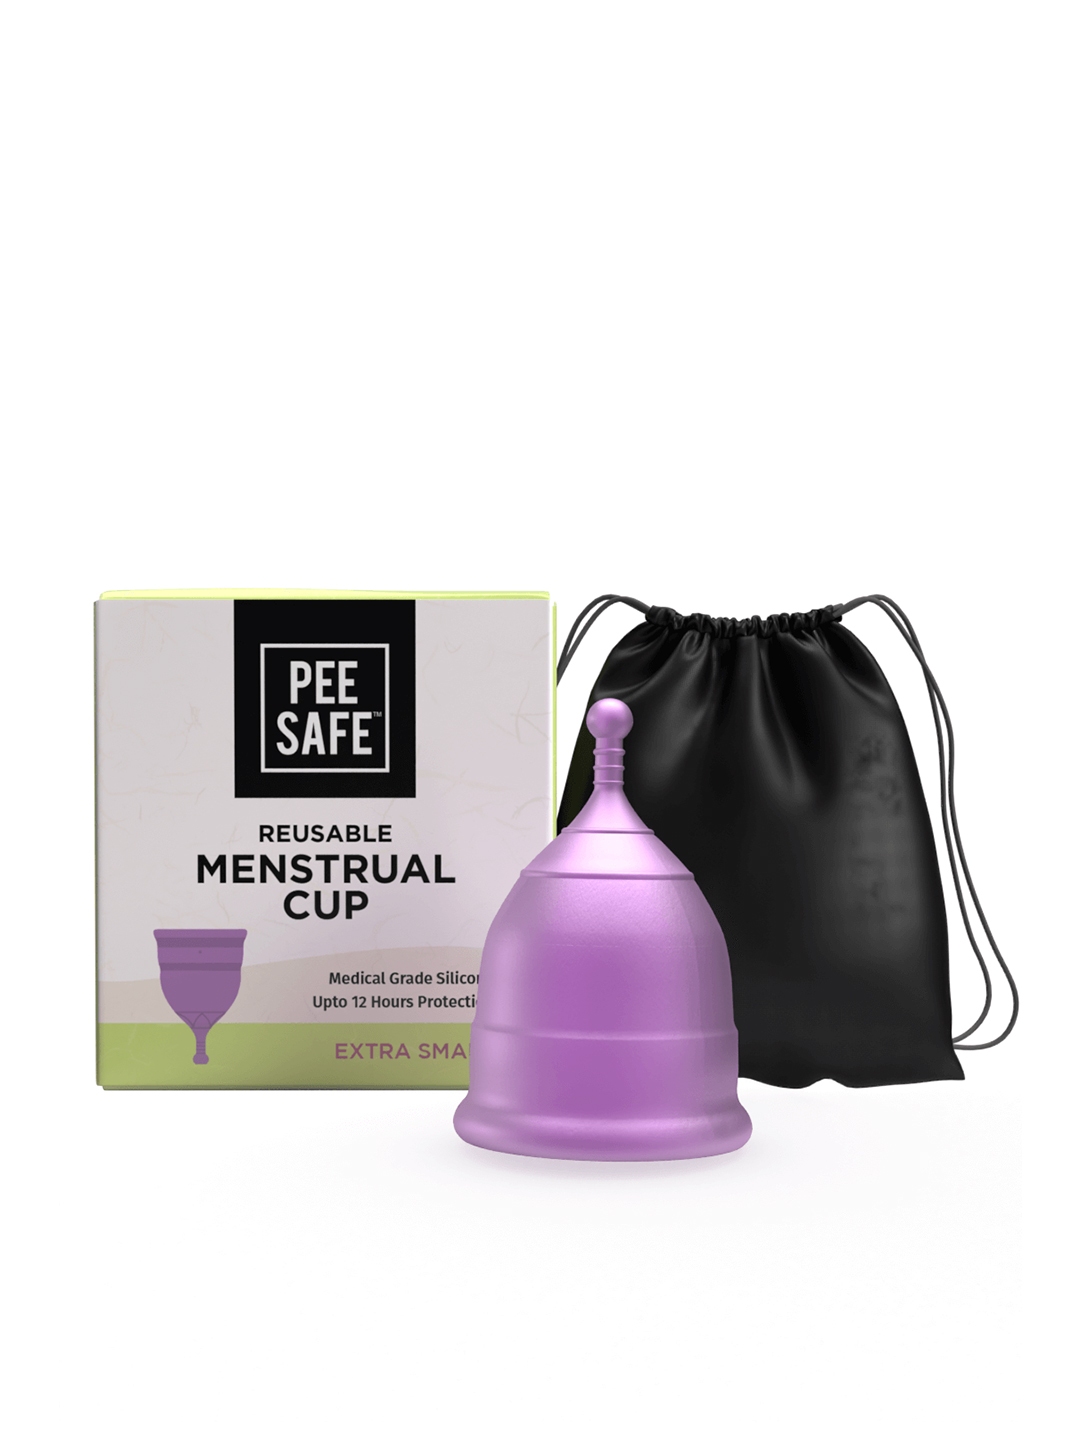 Buy Pee Safe Reusable Menstrual Cup With Medical Grade Silcone Extra Small Feminine Hygiene